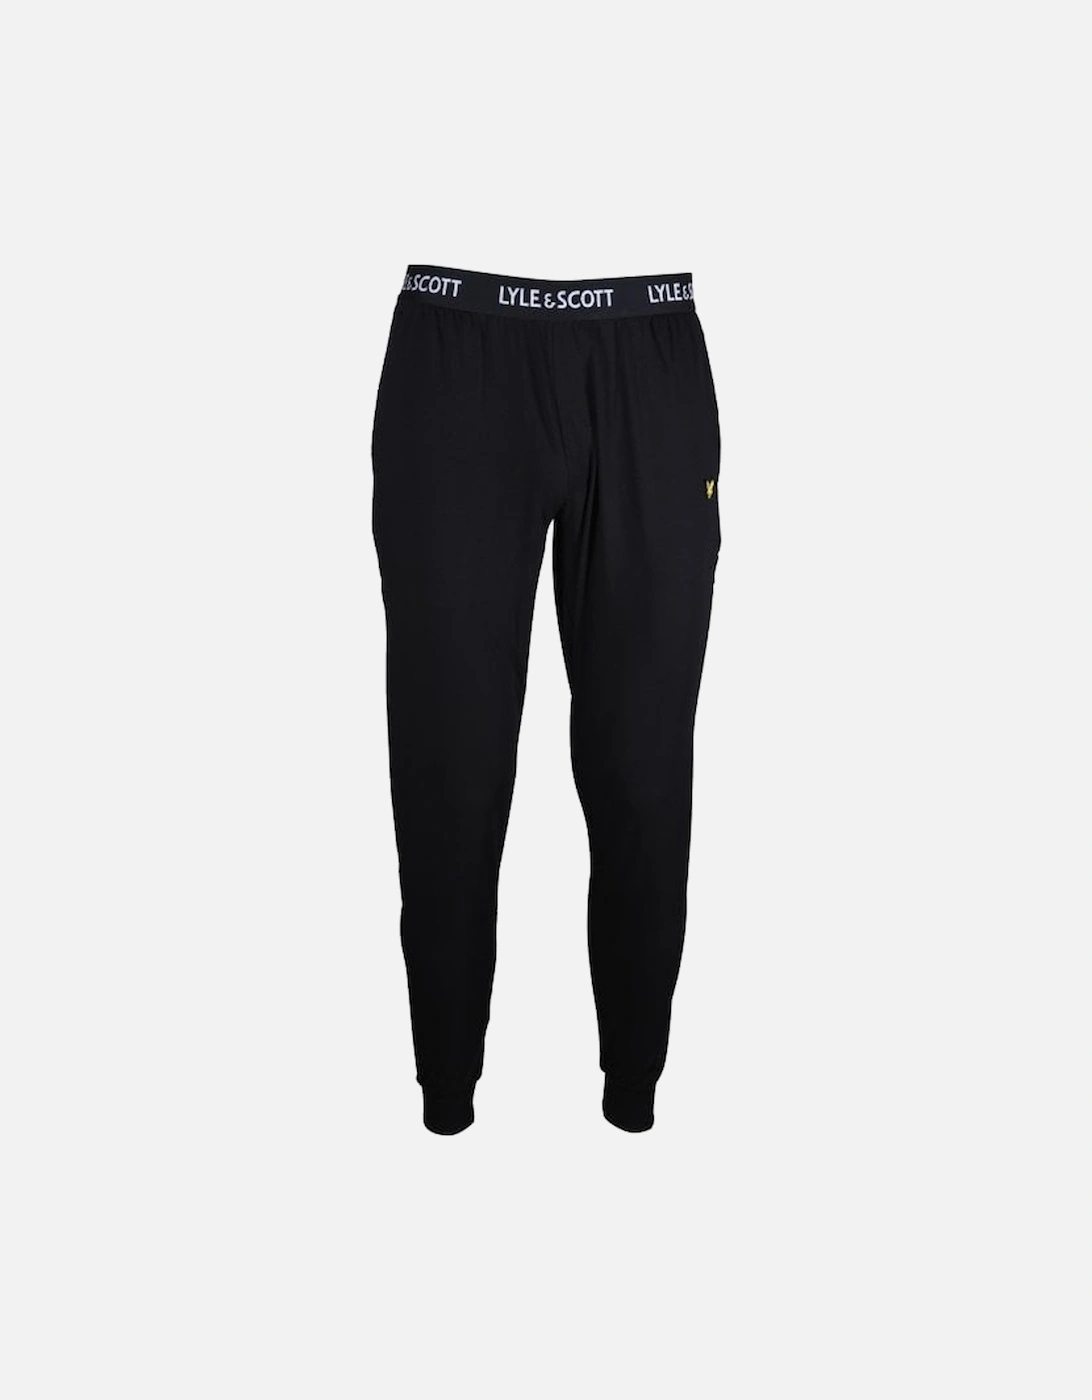 Single Jersey Cuffed Loungewear Jogging Bottoms, Black, 4 of 3